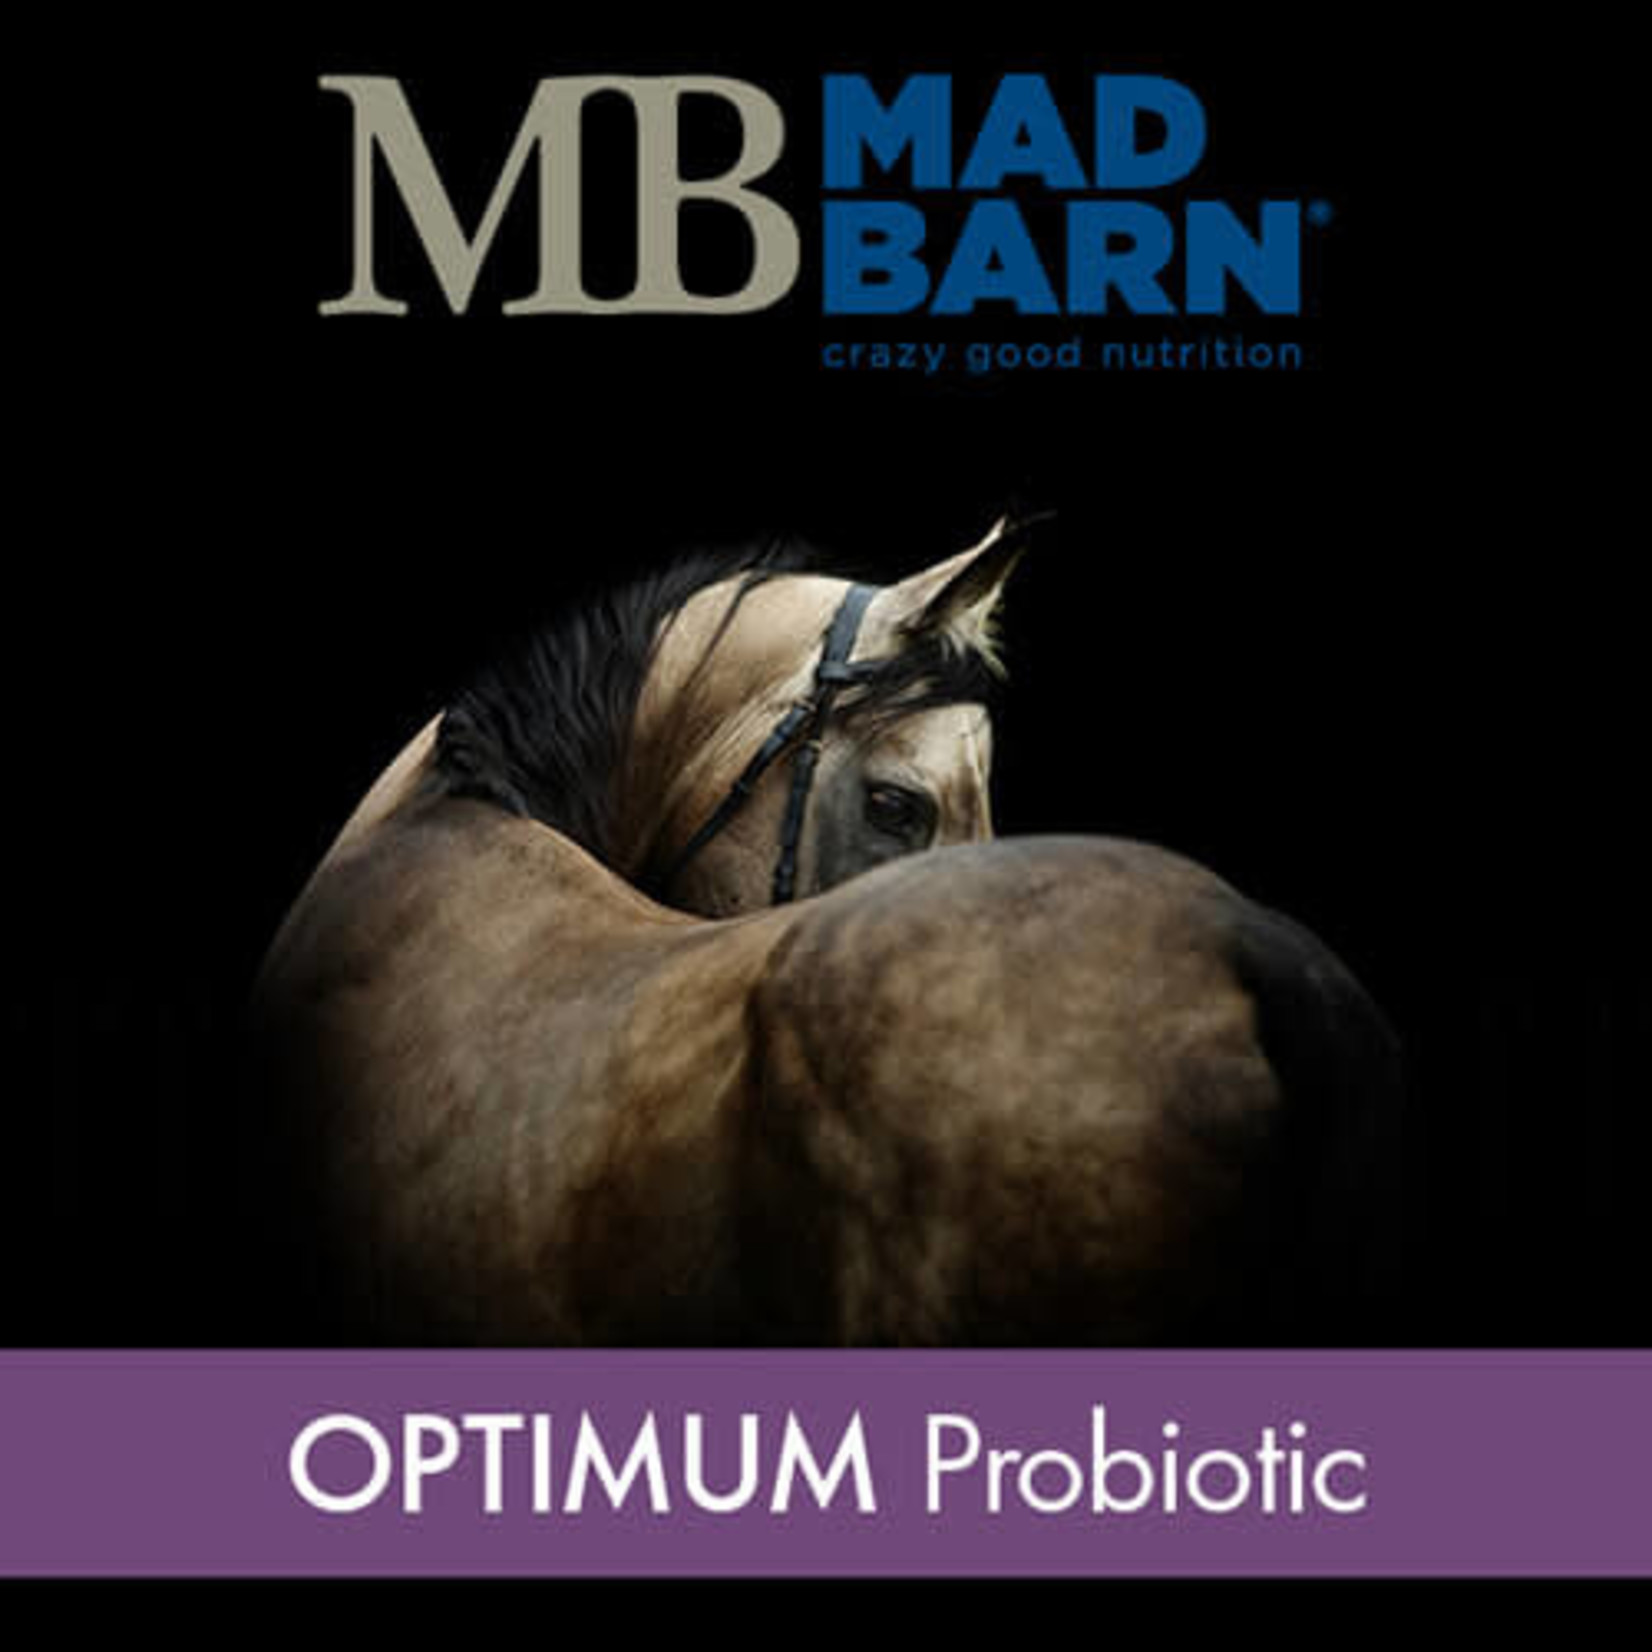 MADBARN OPTIMUM PROBIOTIC 60g